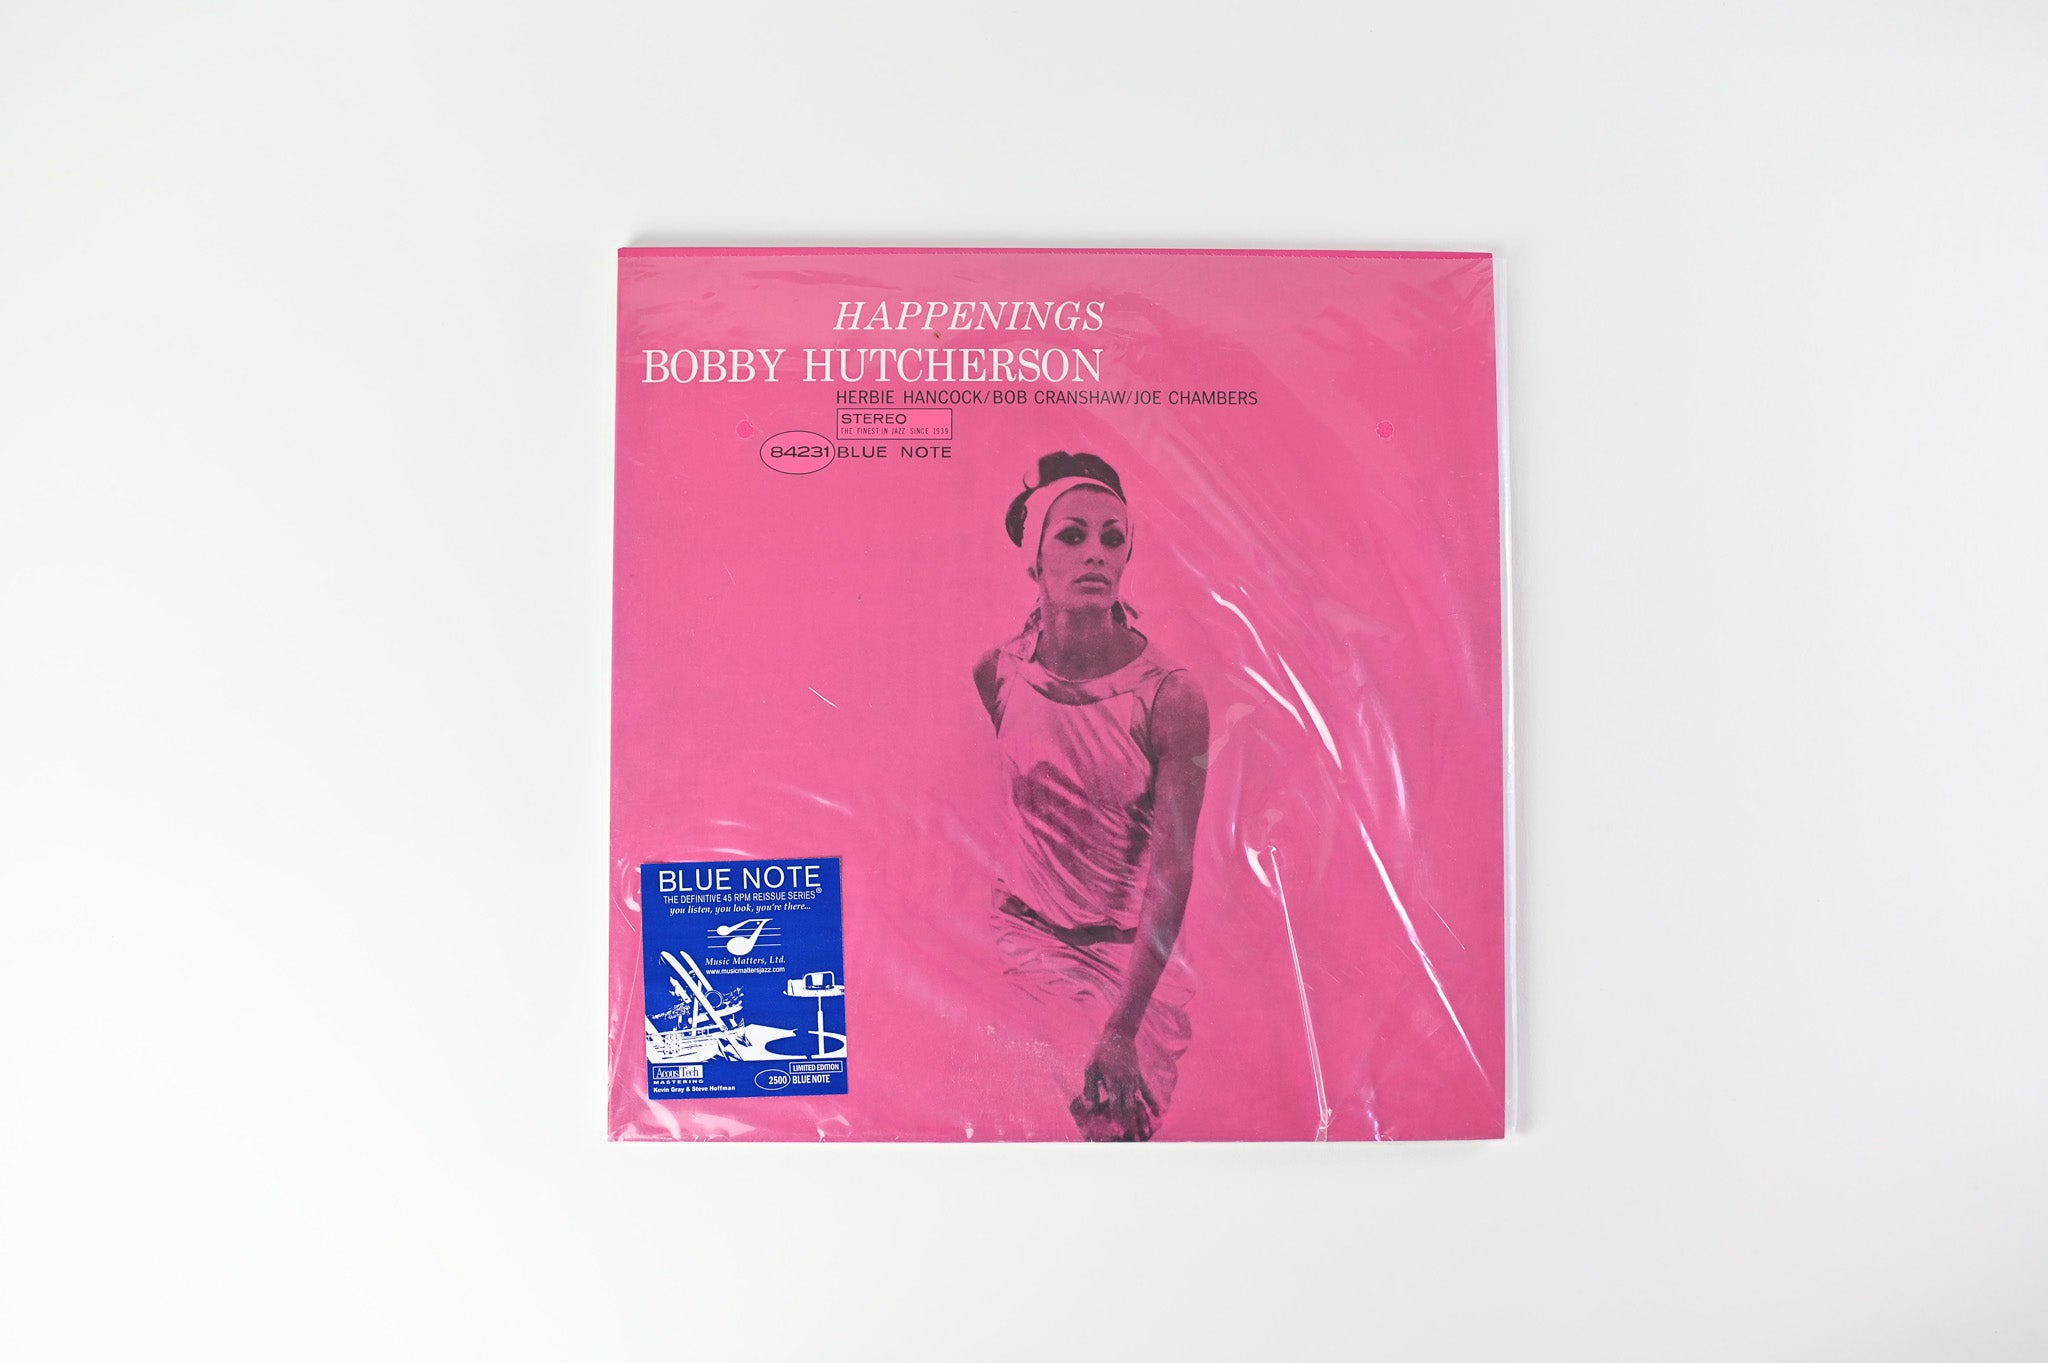 Bobby Hutcherson - Happenings on Blue Note Music Matters Ltd 45 RPM Reissue